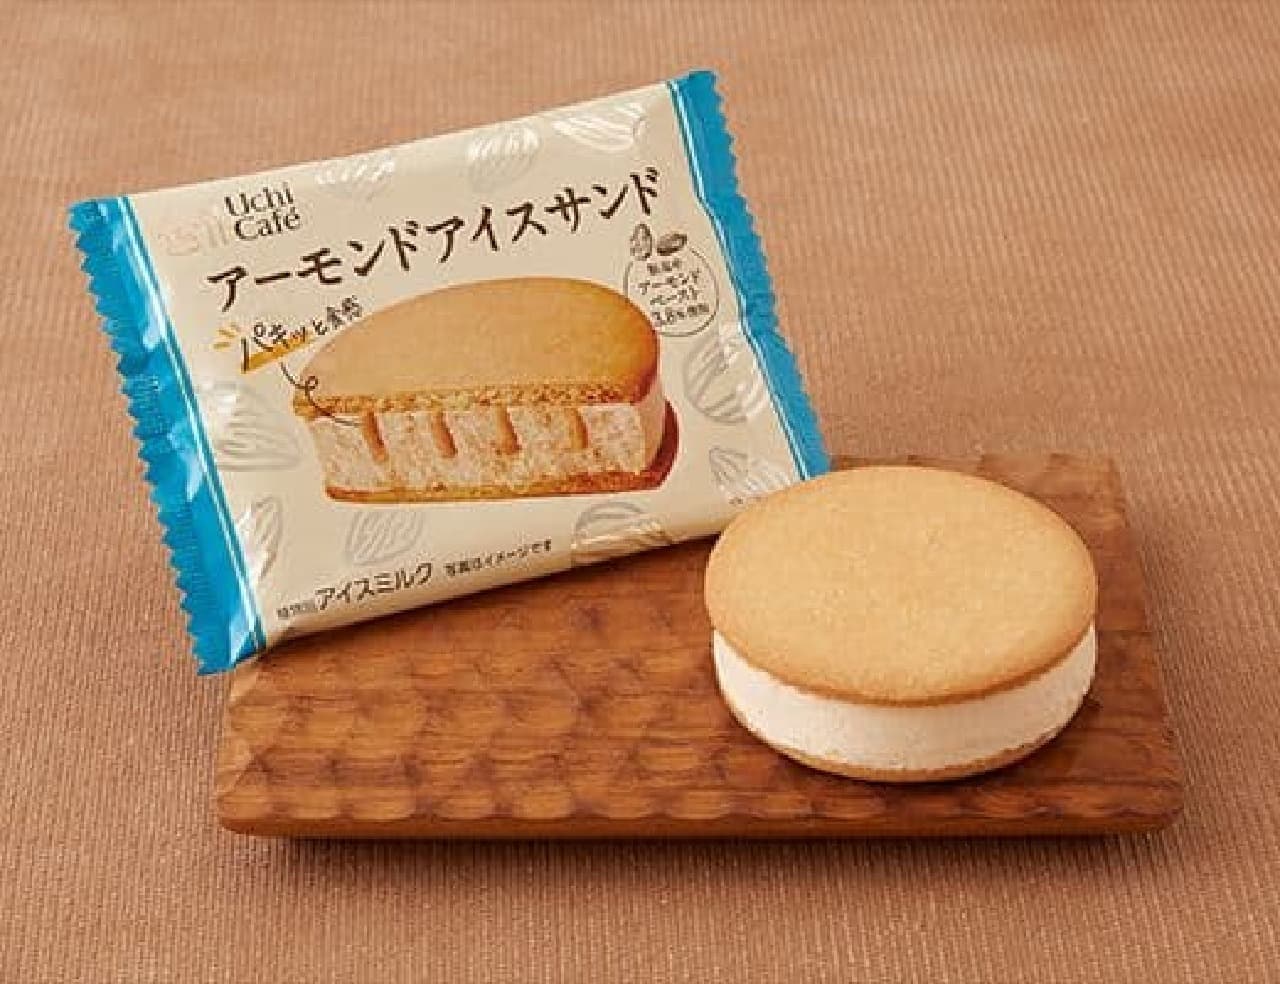 Lawson "Uchi Cafe Almond Ice Sandwich 72ml"